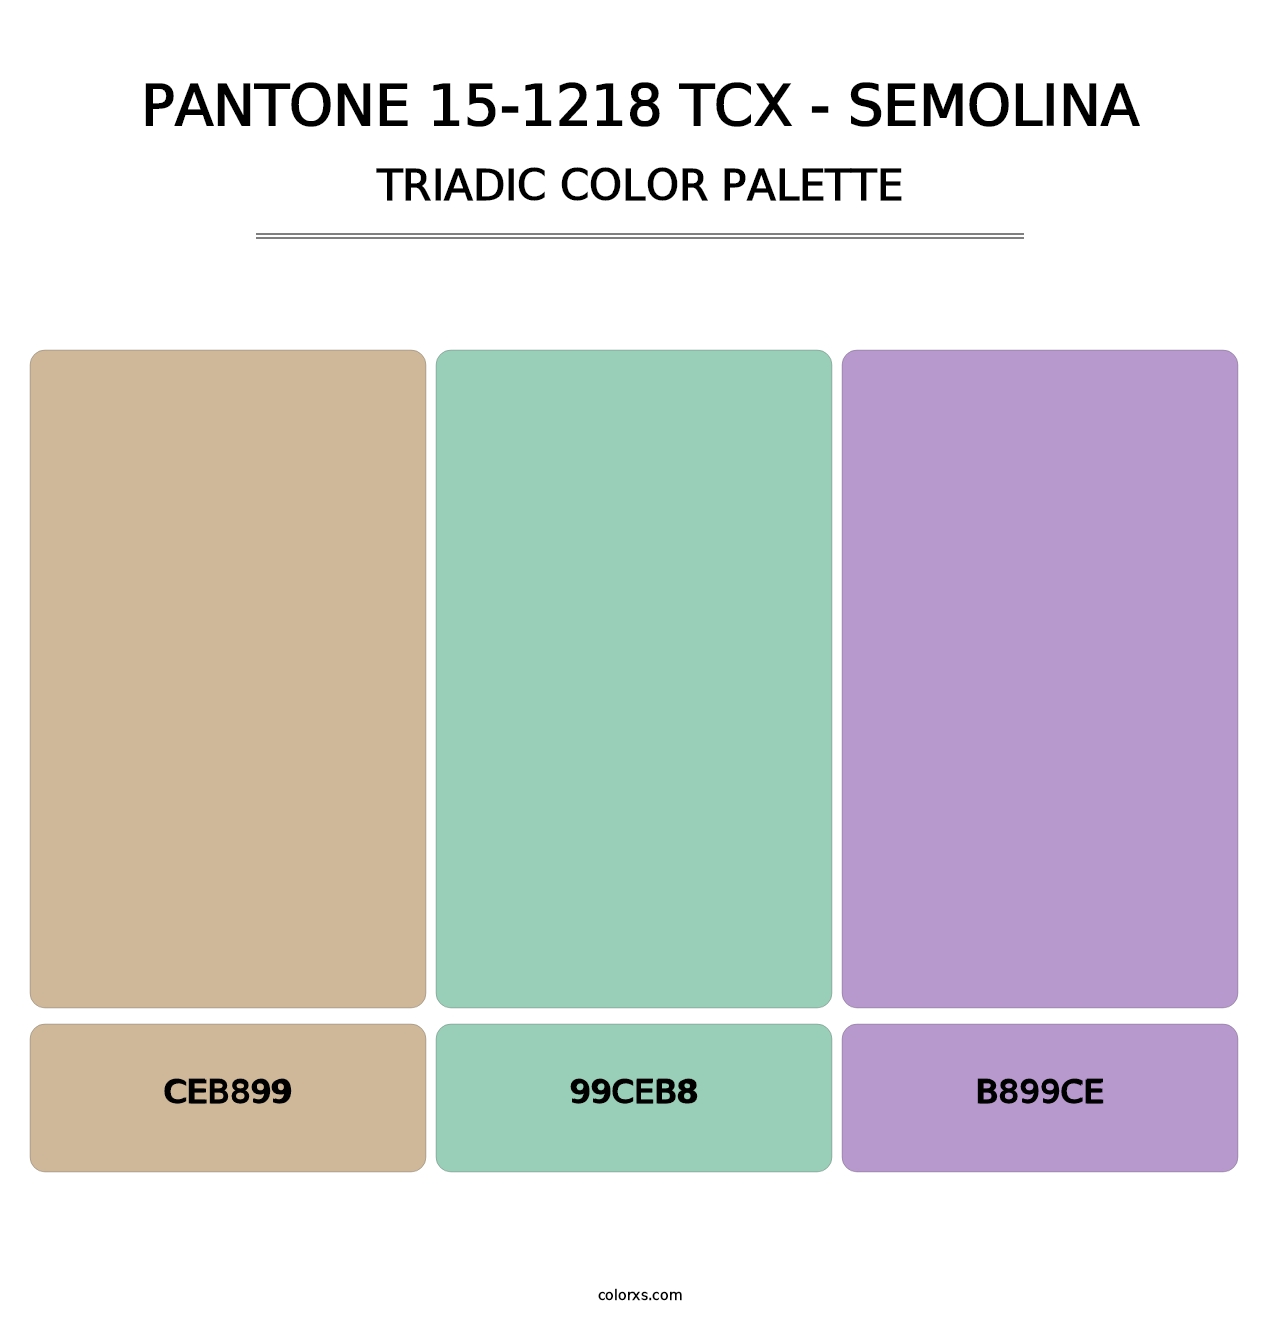 PANTONE 15-1218 TCX - Semolina - Triadic Color Palette